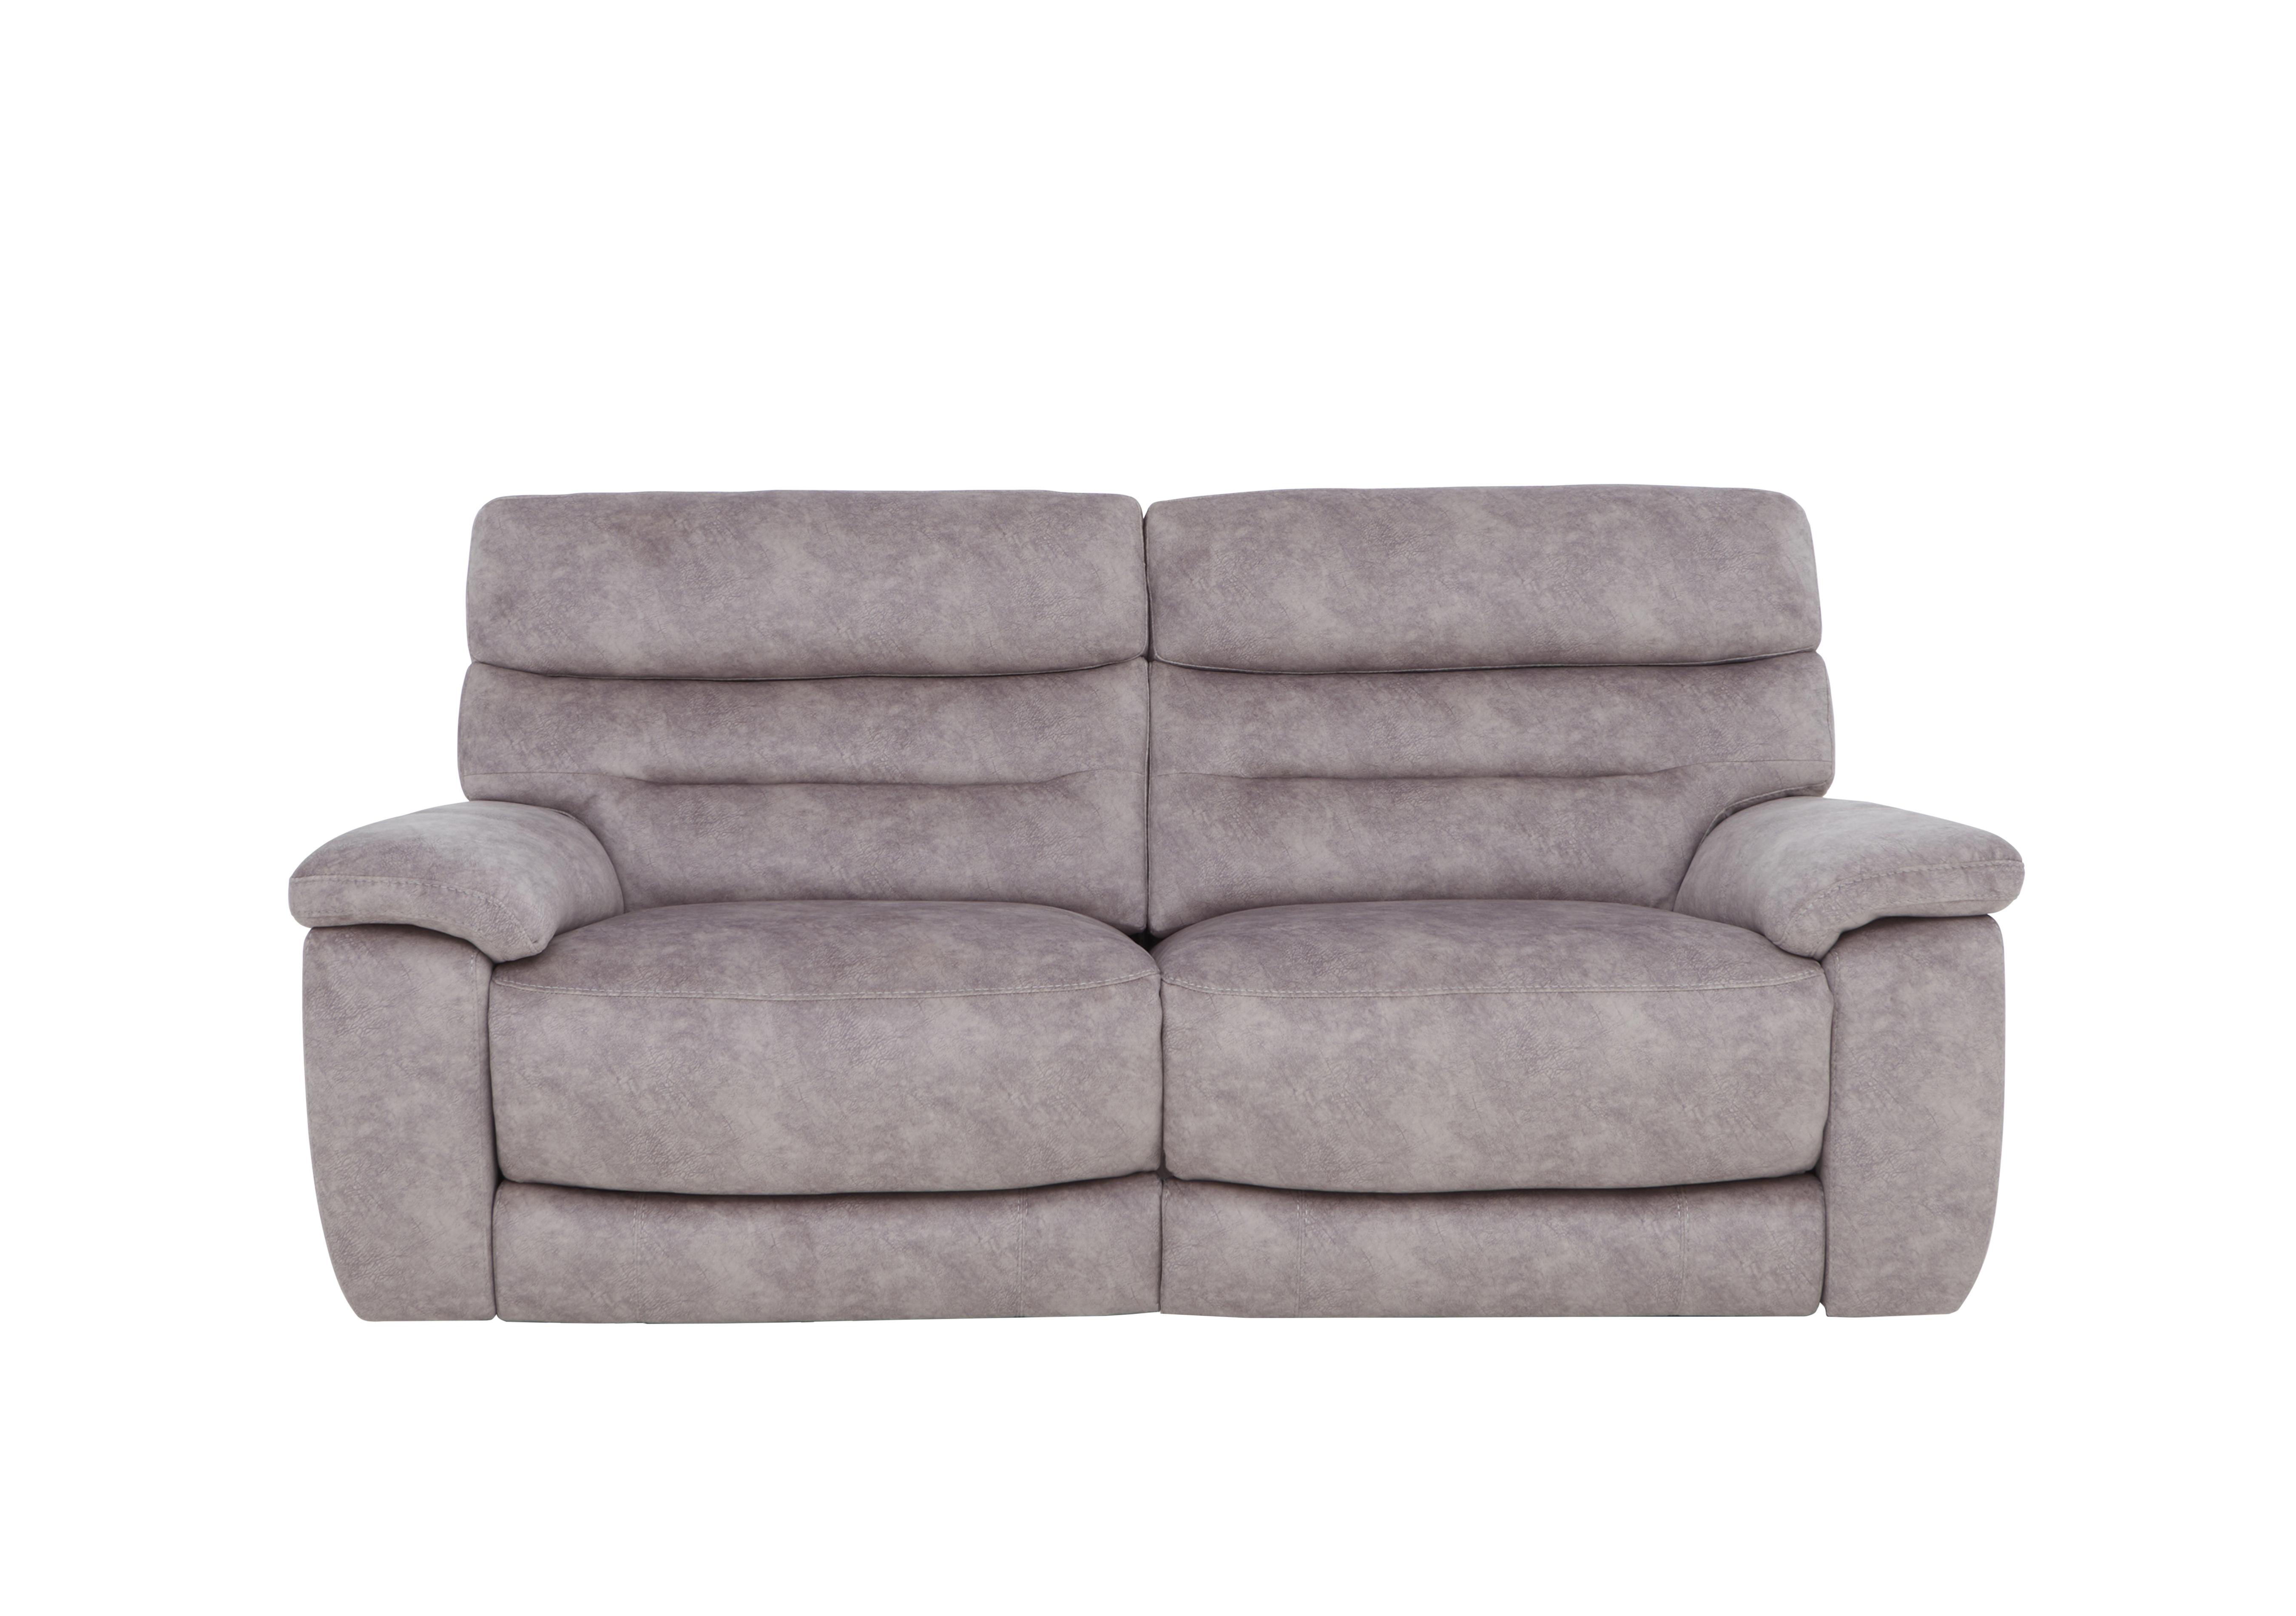 Nimbus 3 Seater Fabric Power Recliner Sofa with Power Headrests in Bfa-Bnn-R28 Grey on Furniture Village